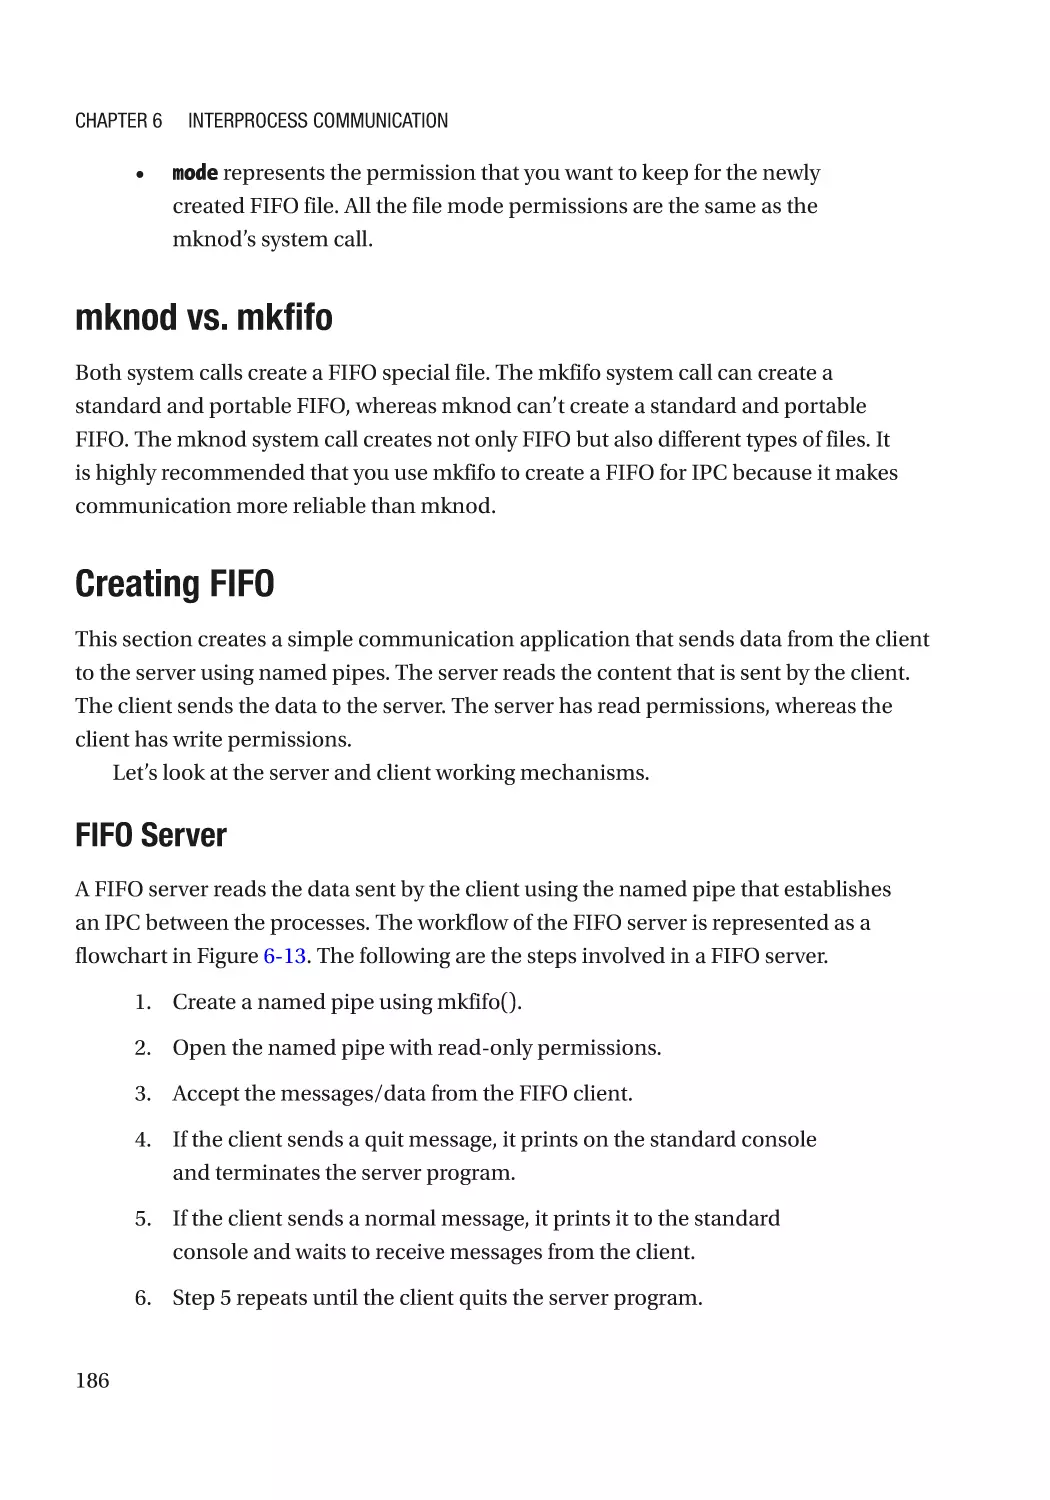 mknod vs. mkfifo
Creating FIFO
FIFO Server